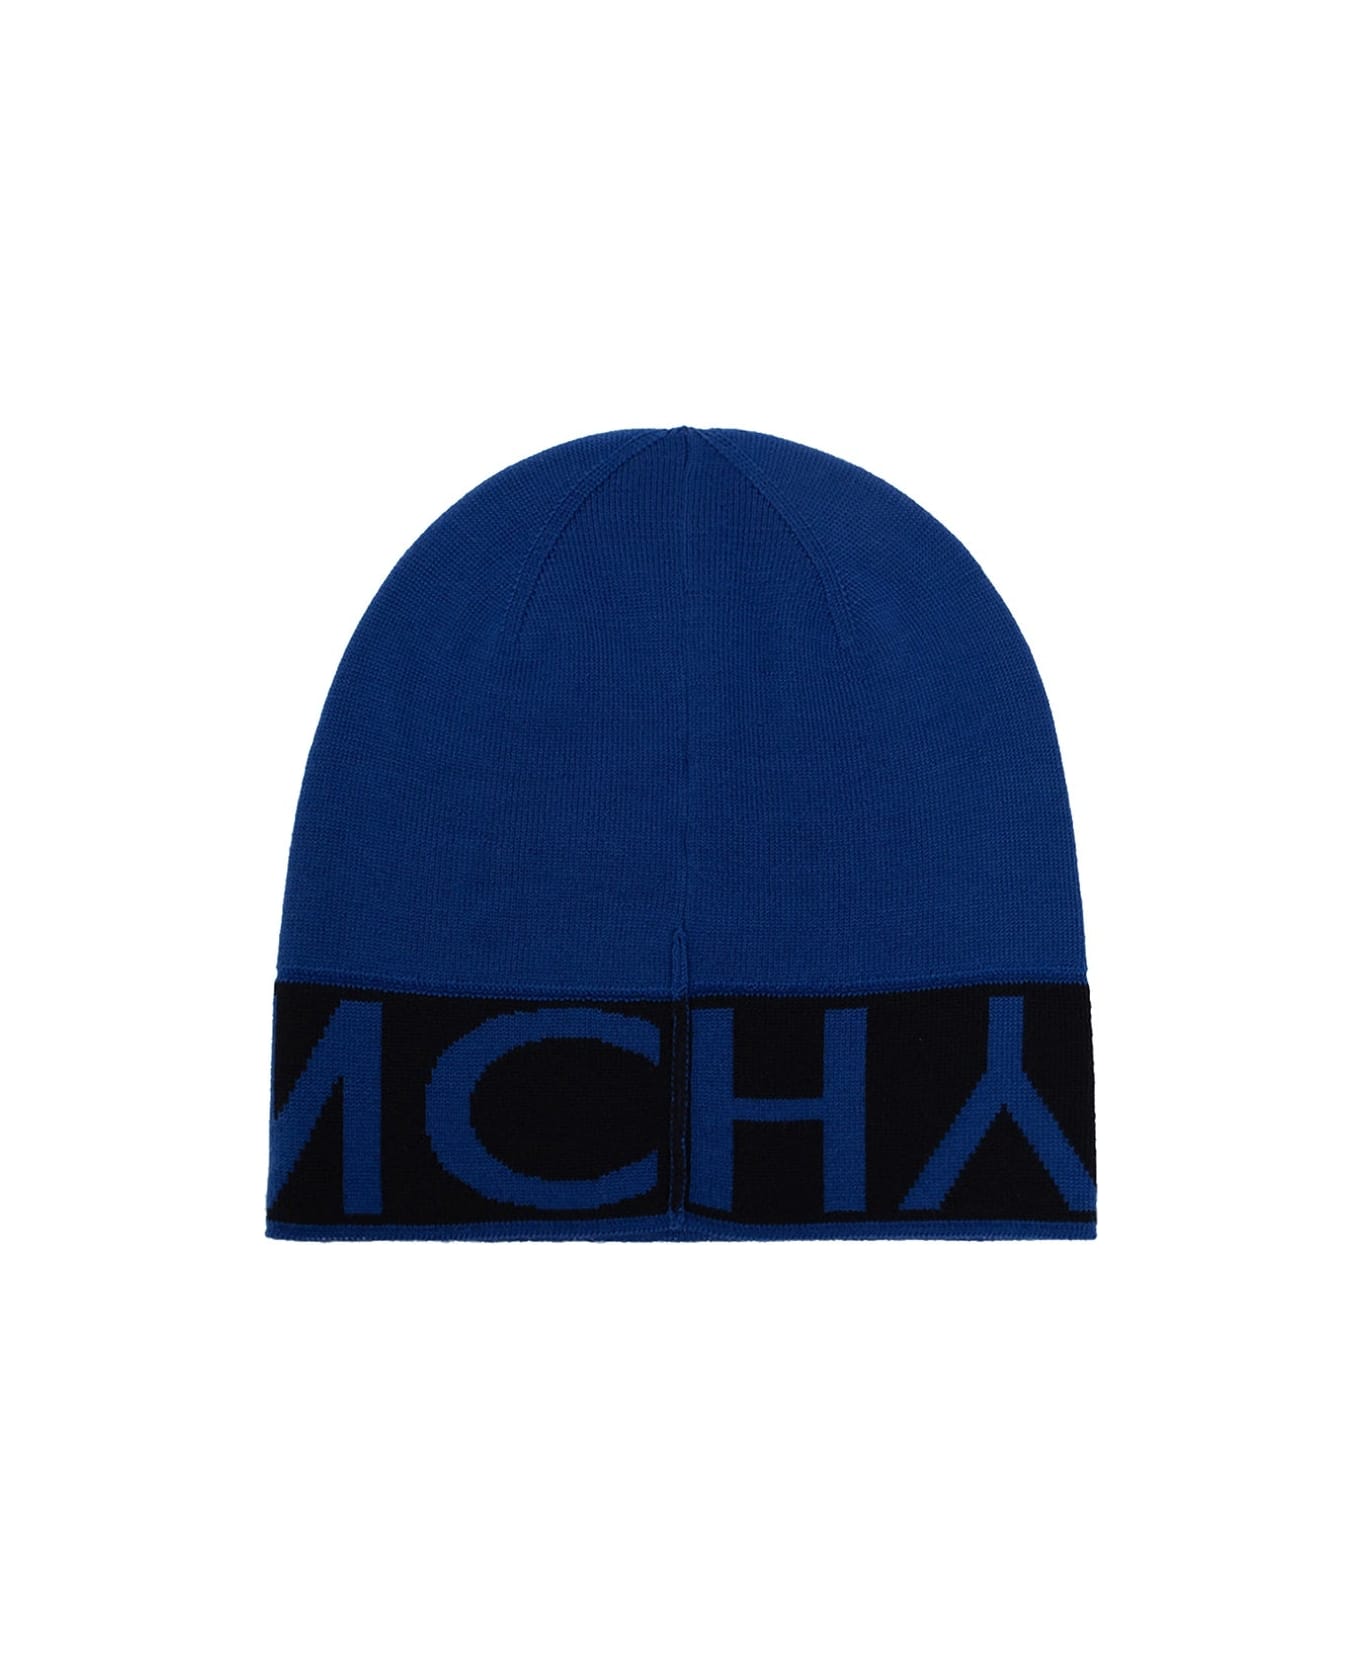 Givenchy Wool Logo Hat - Blue